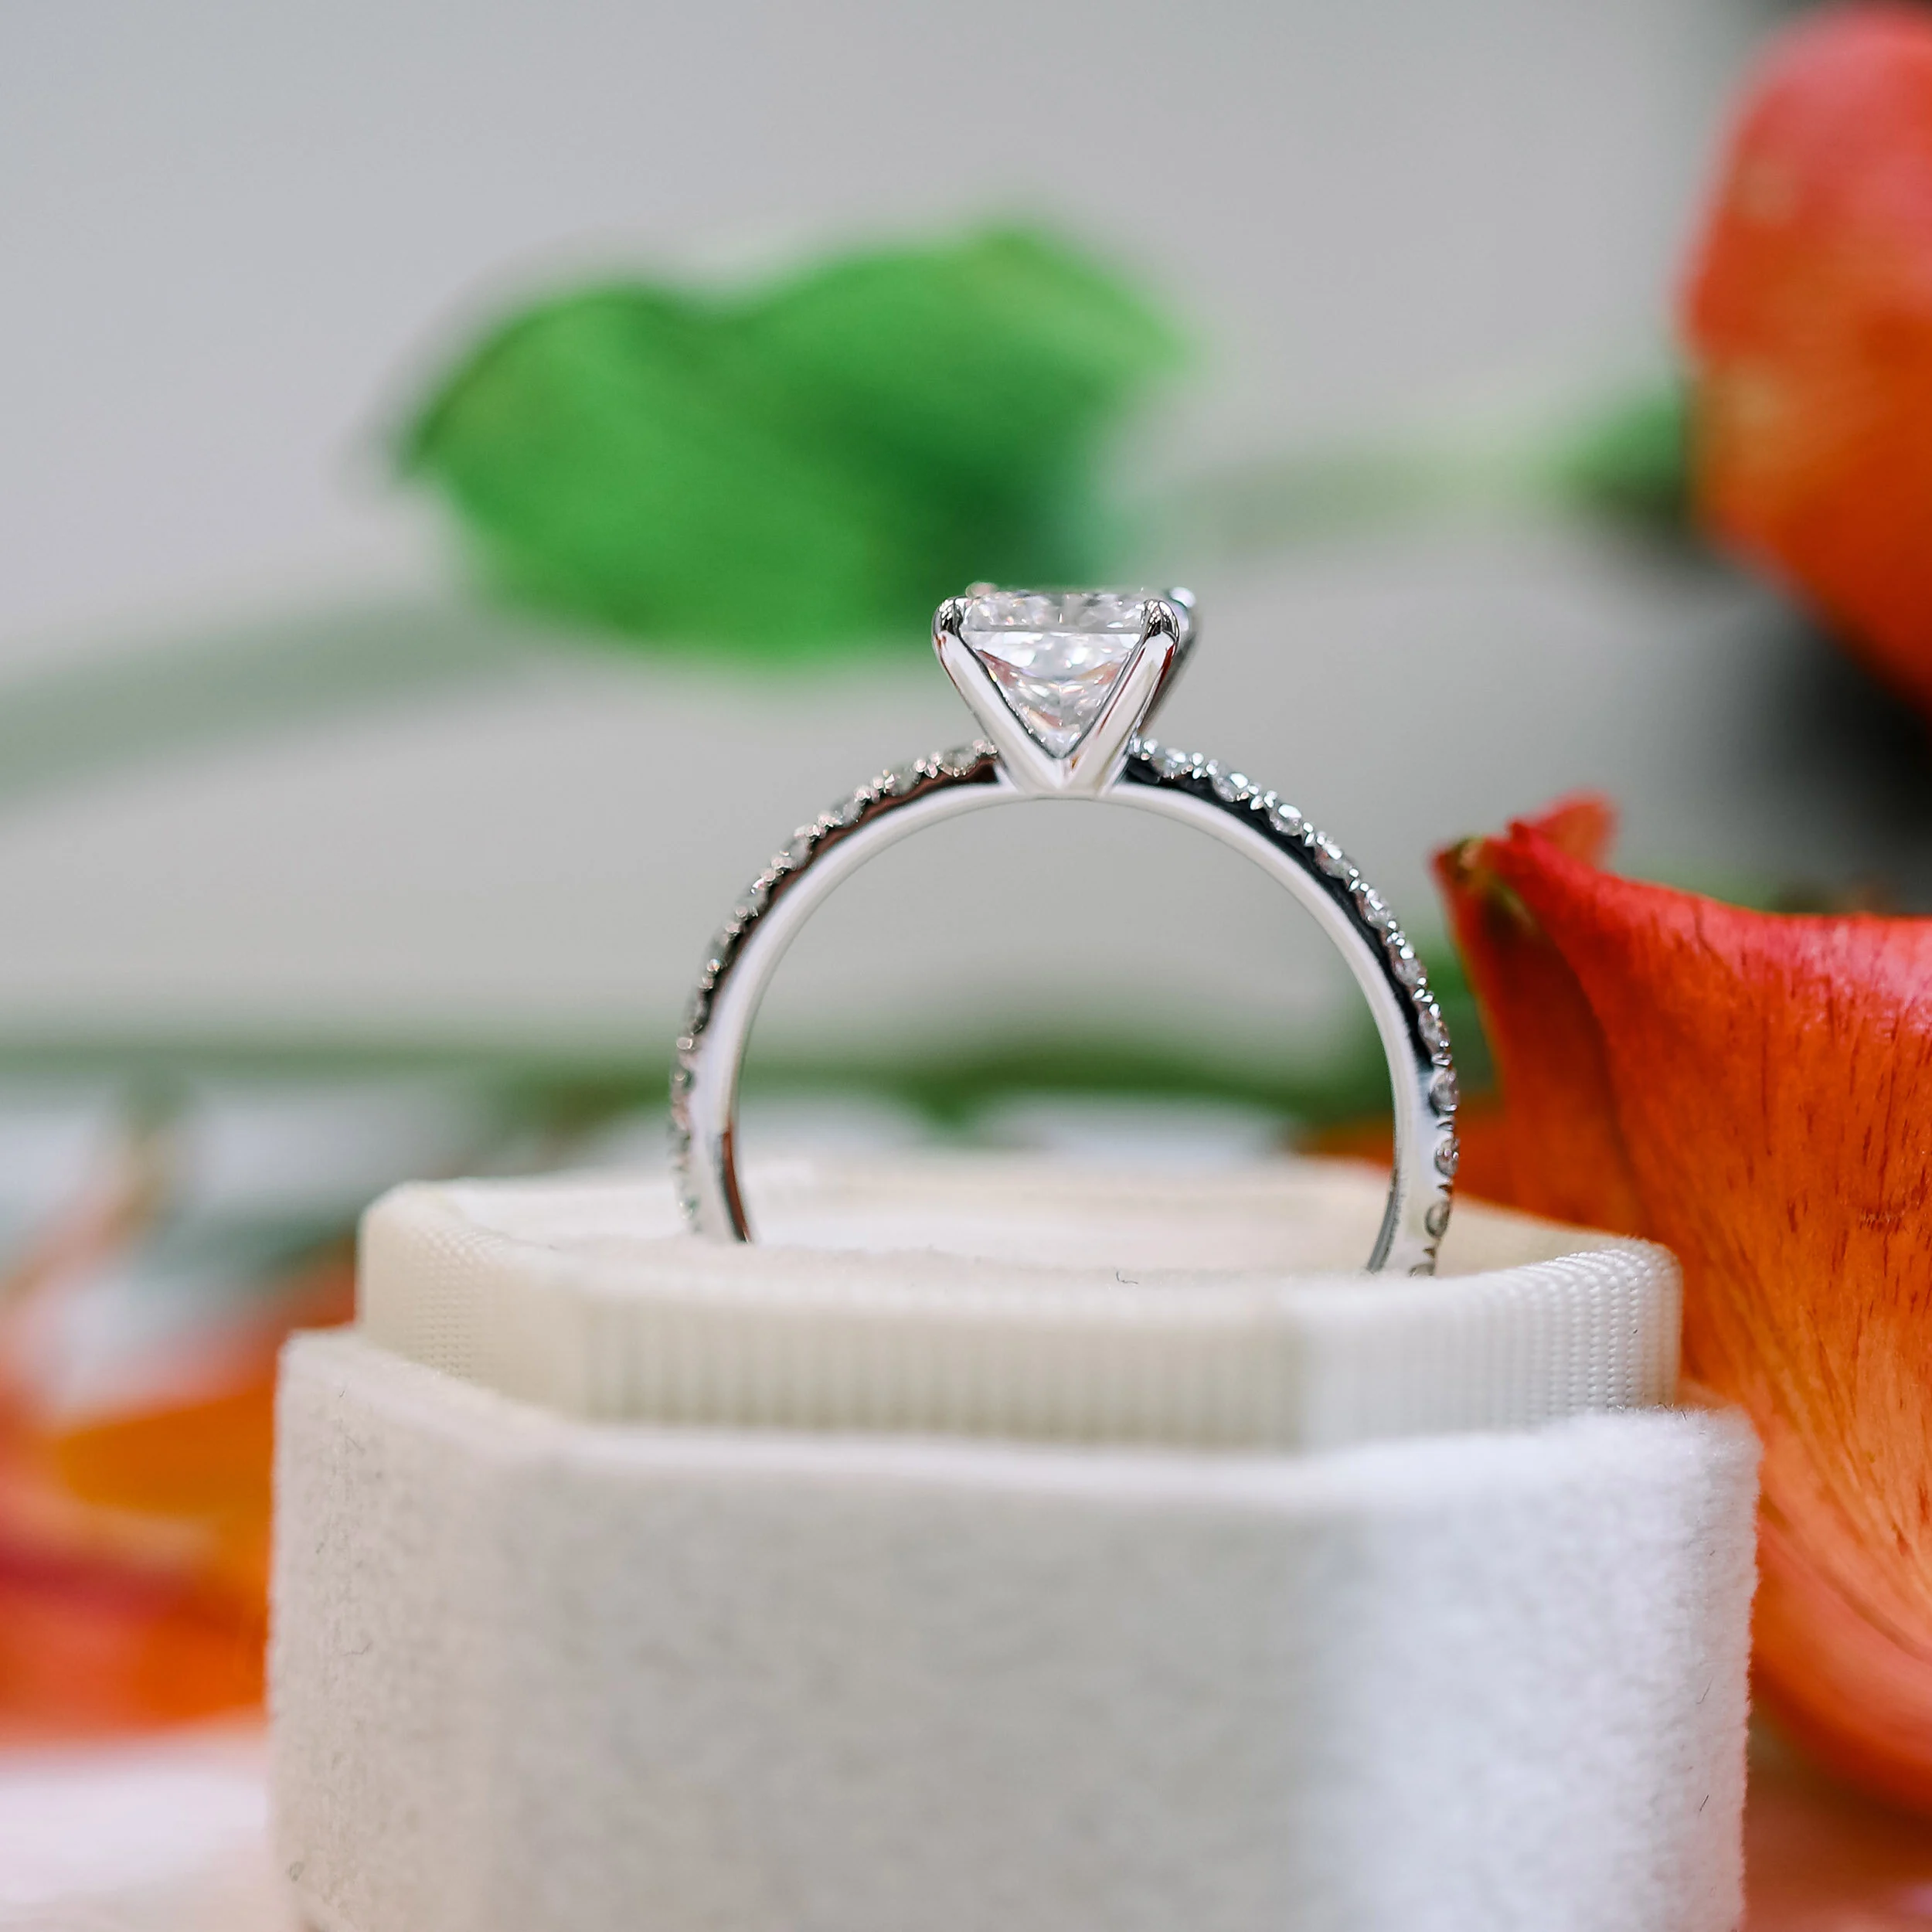 14k White Gold 1.5ct Princess Lab Diamond Ring with Diamonds on the Band Ada Diamonds Design AD-150 Profile View